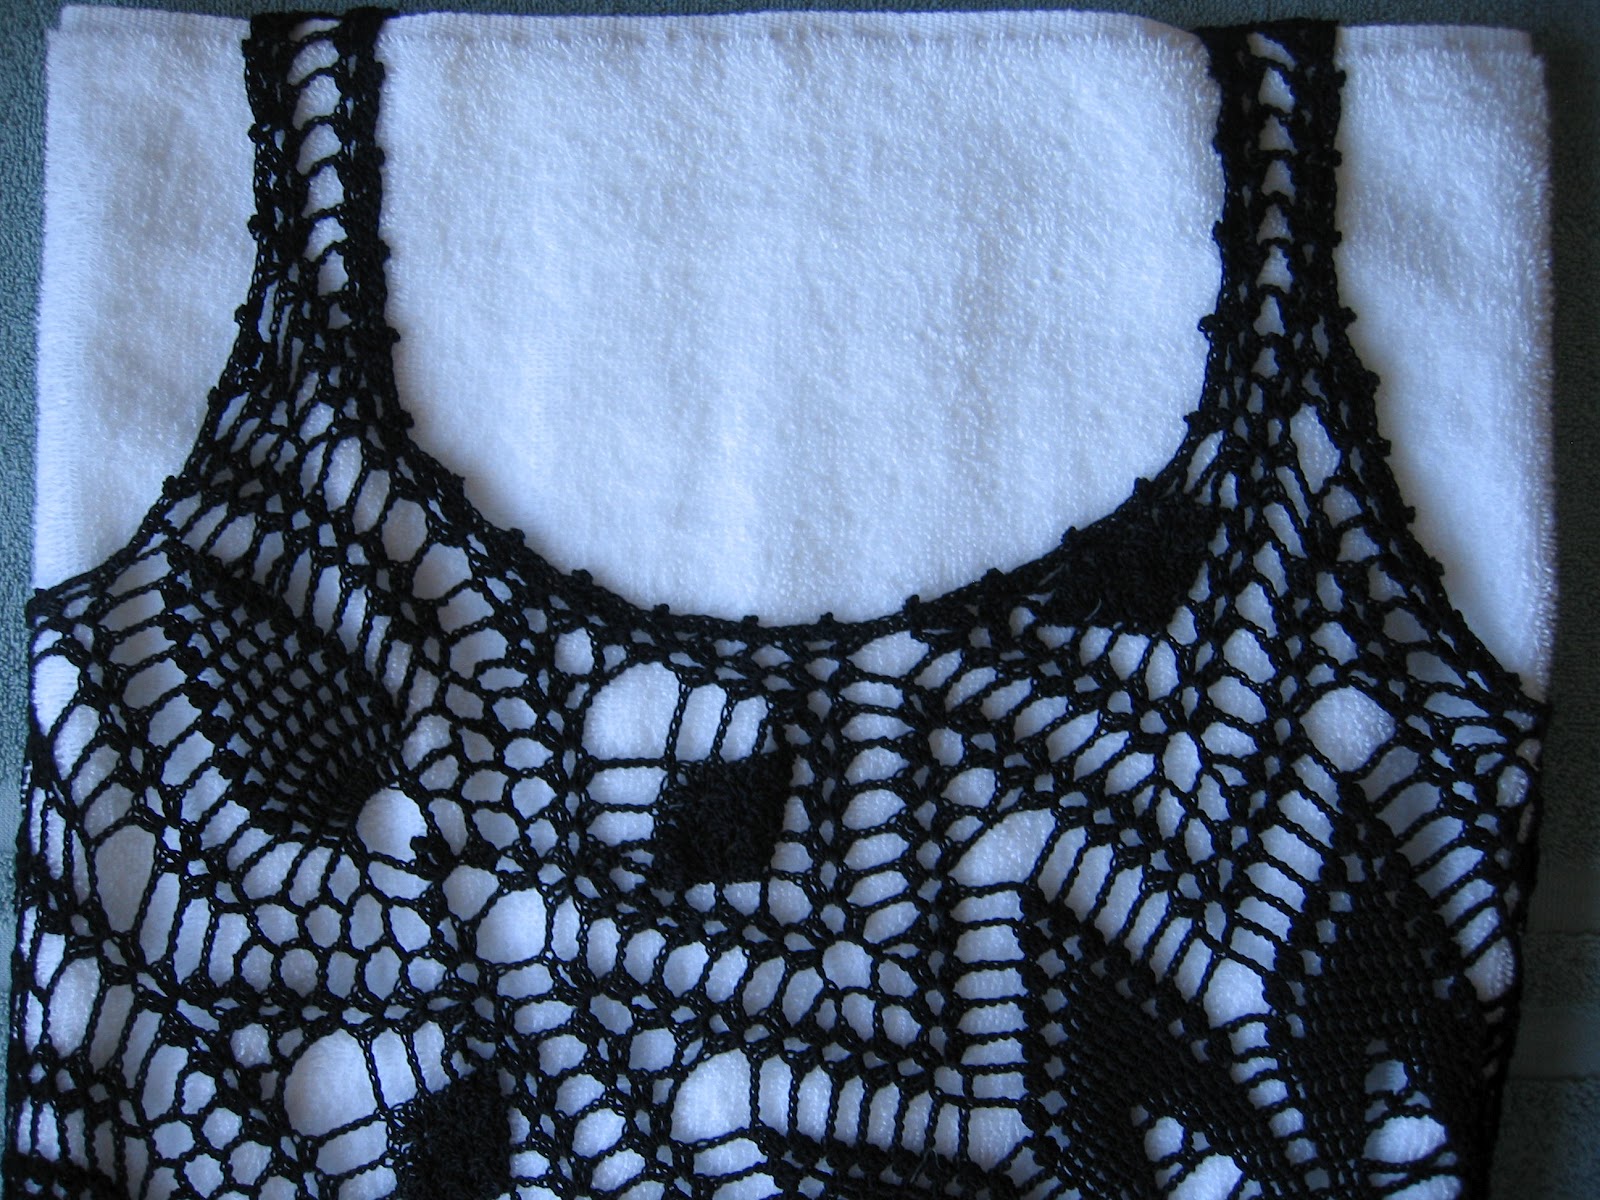 Crochet &amp; Knit: Patterns, Projects, Ideas: crocheted dress /платье крючком